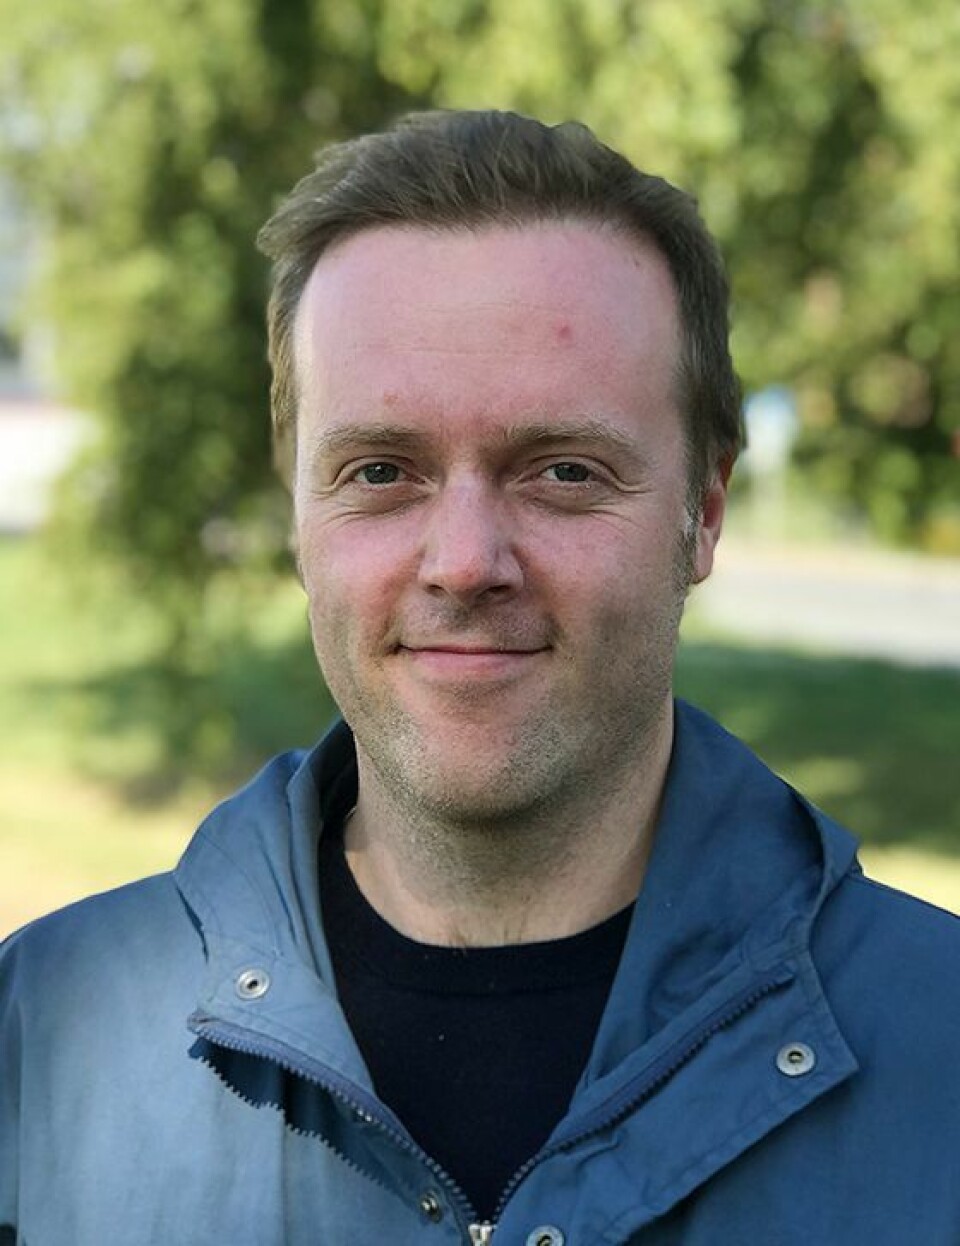 Morten Onsrud i Norsirk er kjemiker og materialteknolog med doktorgrad i batteriteknologi fra Norges teknisk-naturvitenskapelige universitet (NTNU). Foto: Norsirk.